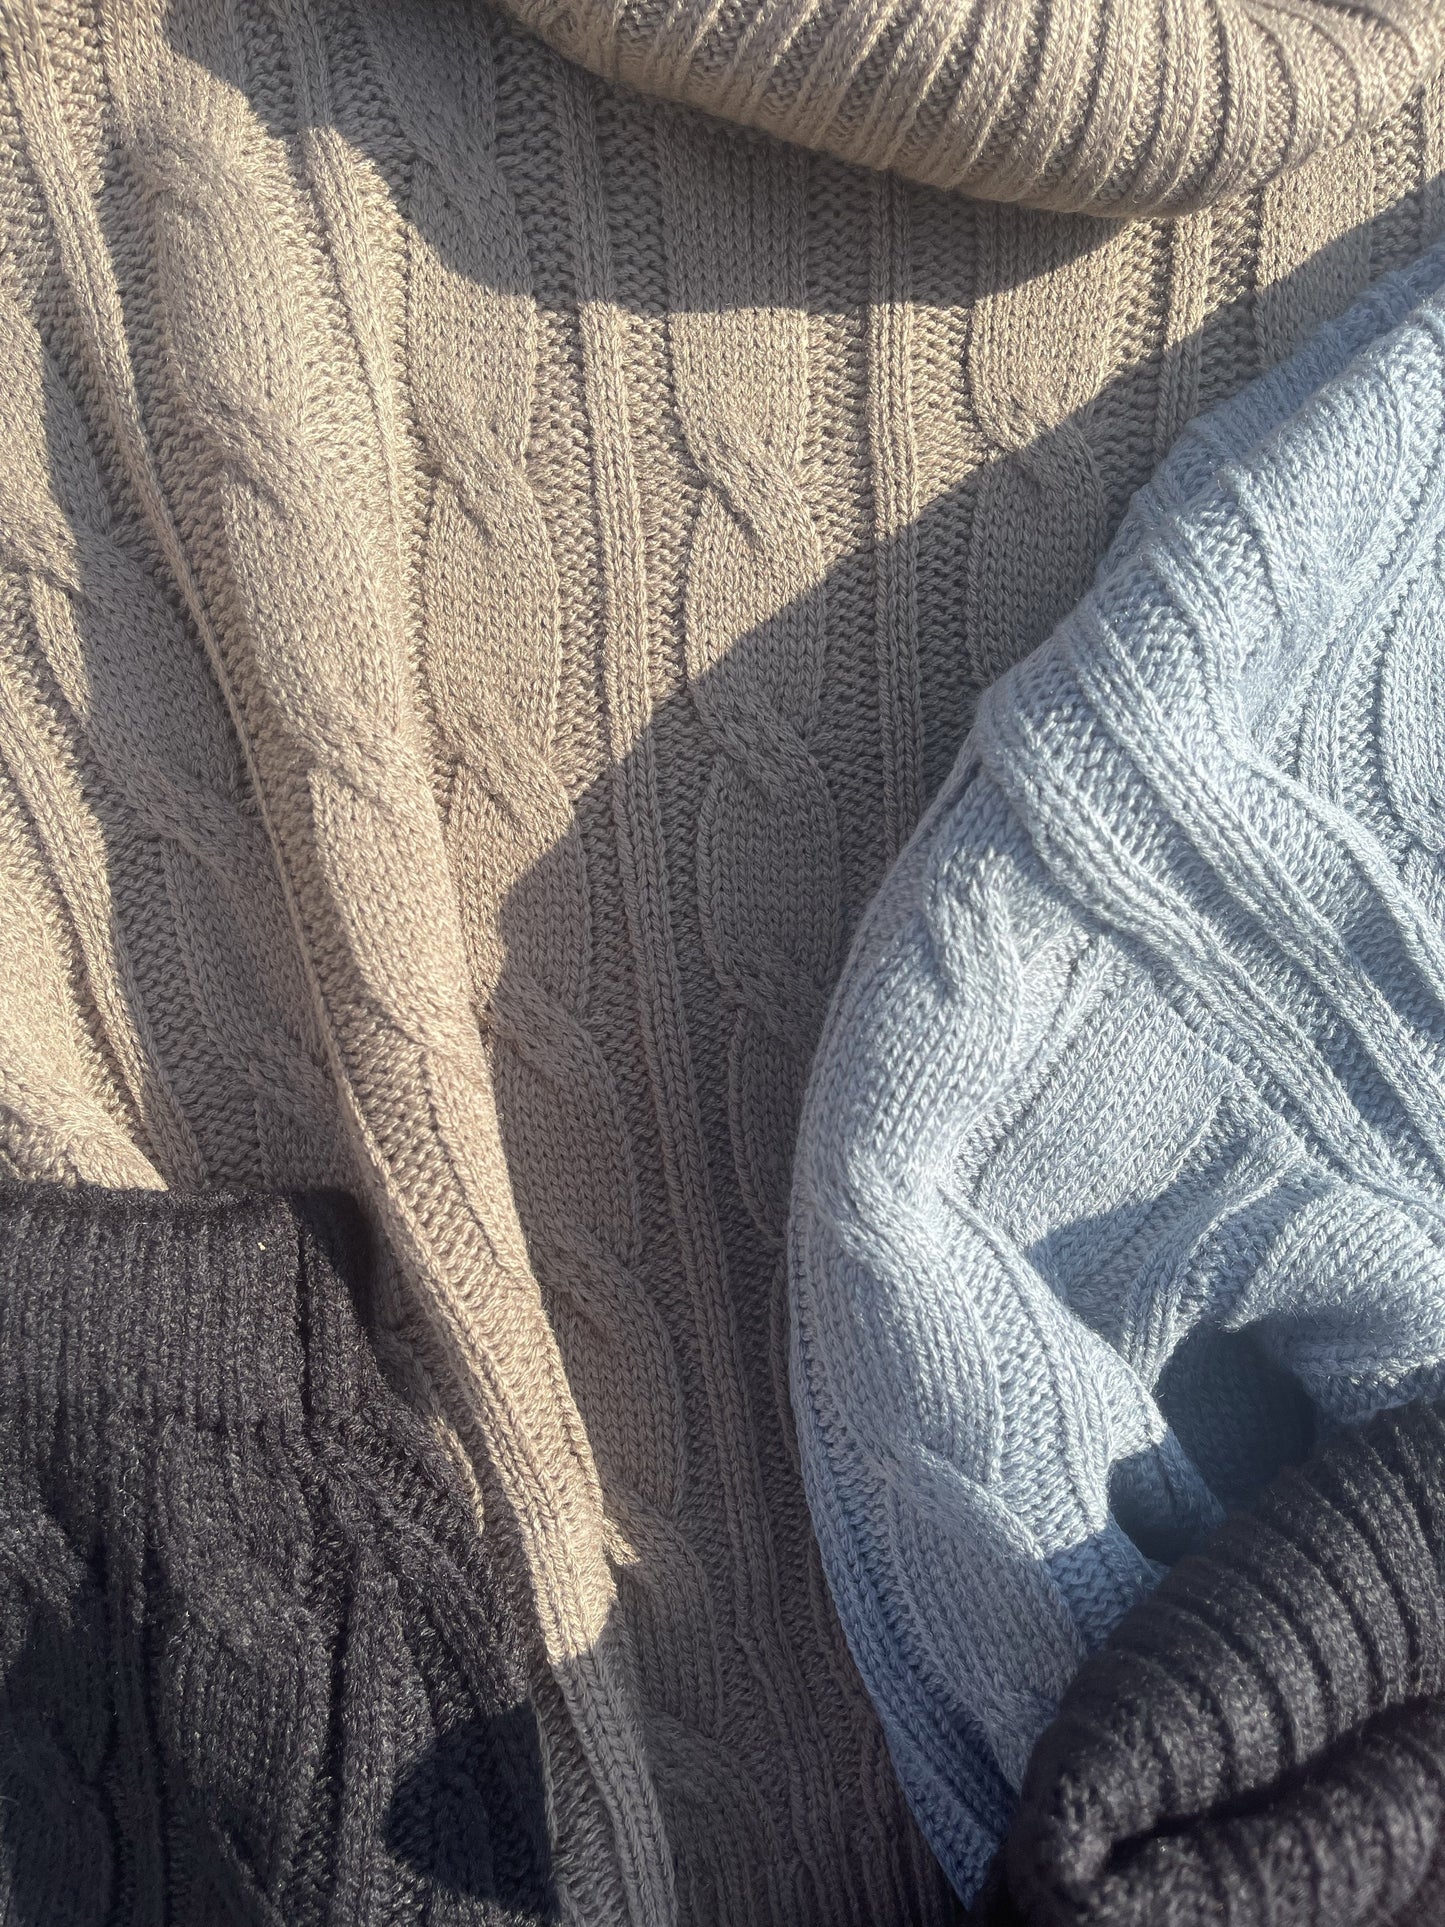 Snug knit sweater (coco brown)